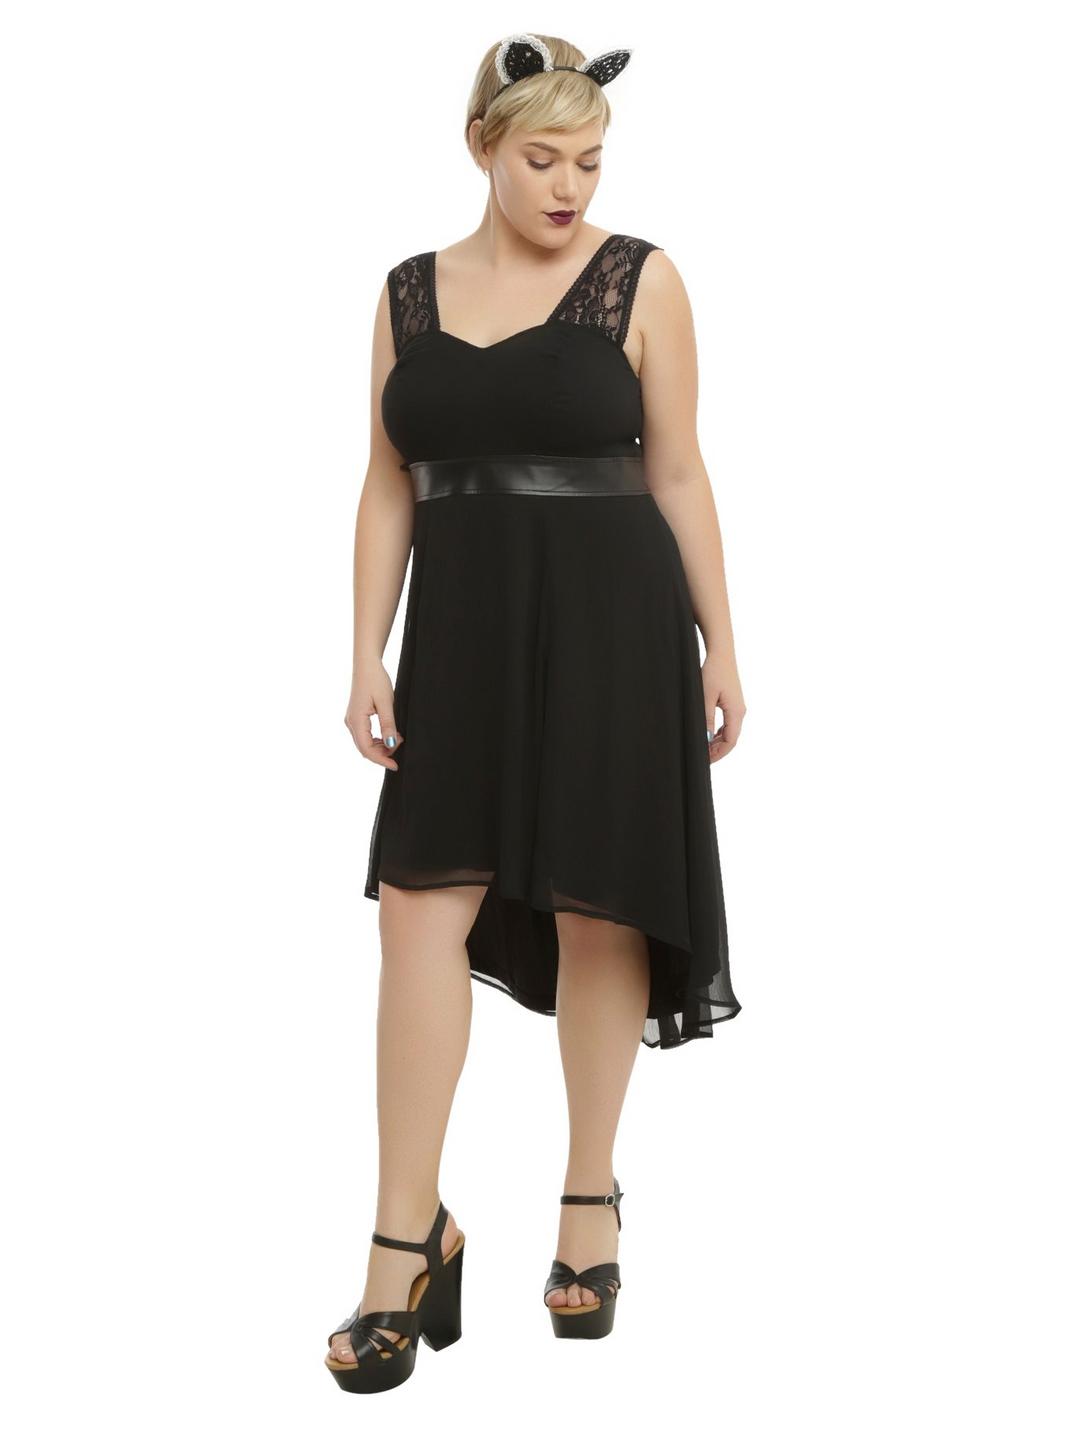 Tripp Black Hi-Low Dress Plus Size, BLACK, hi-res